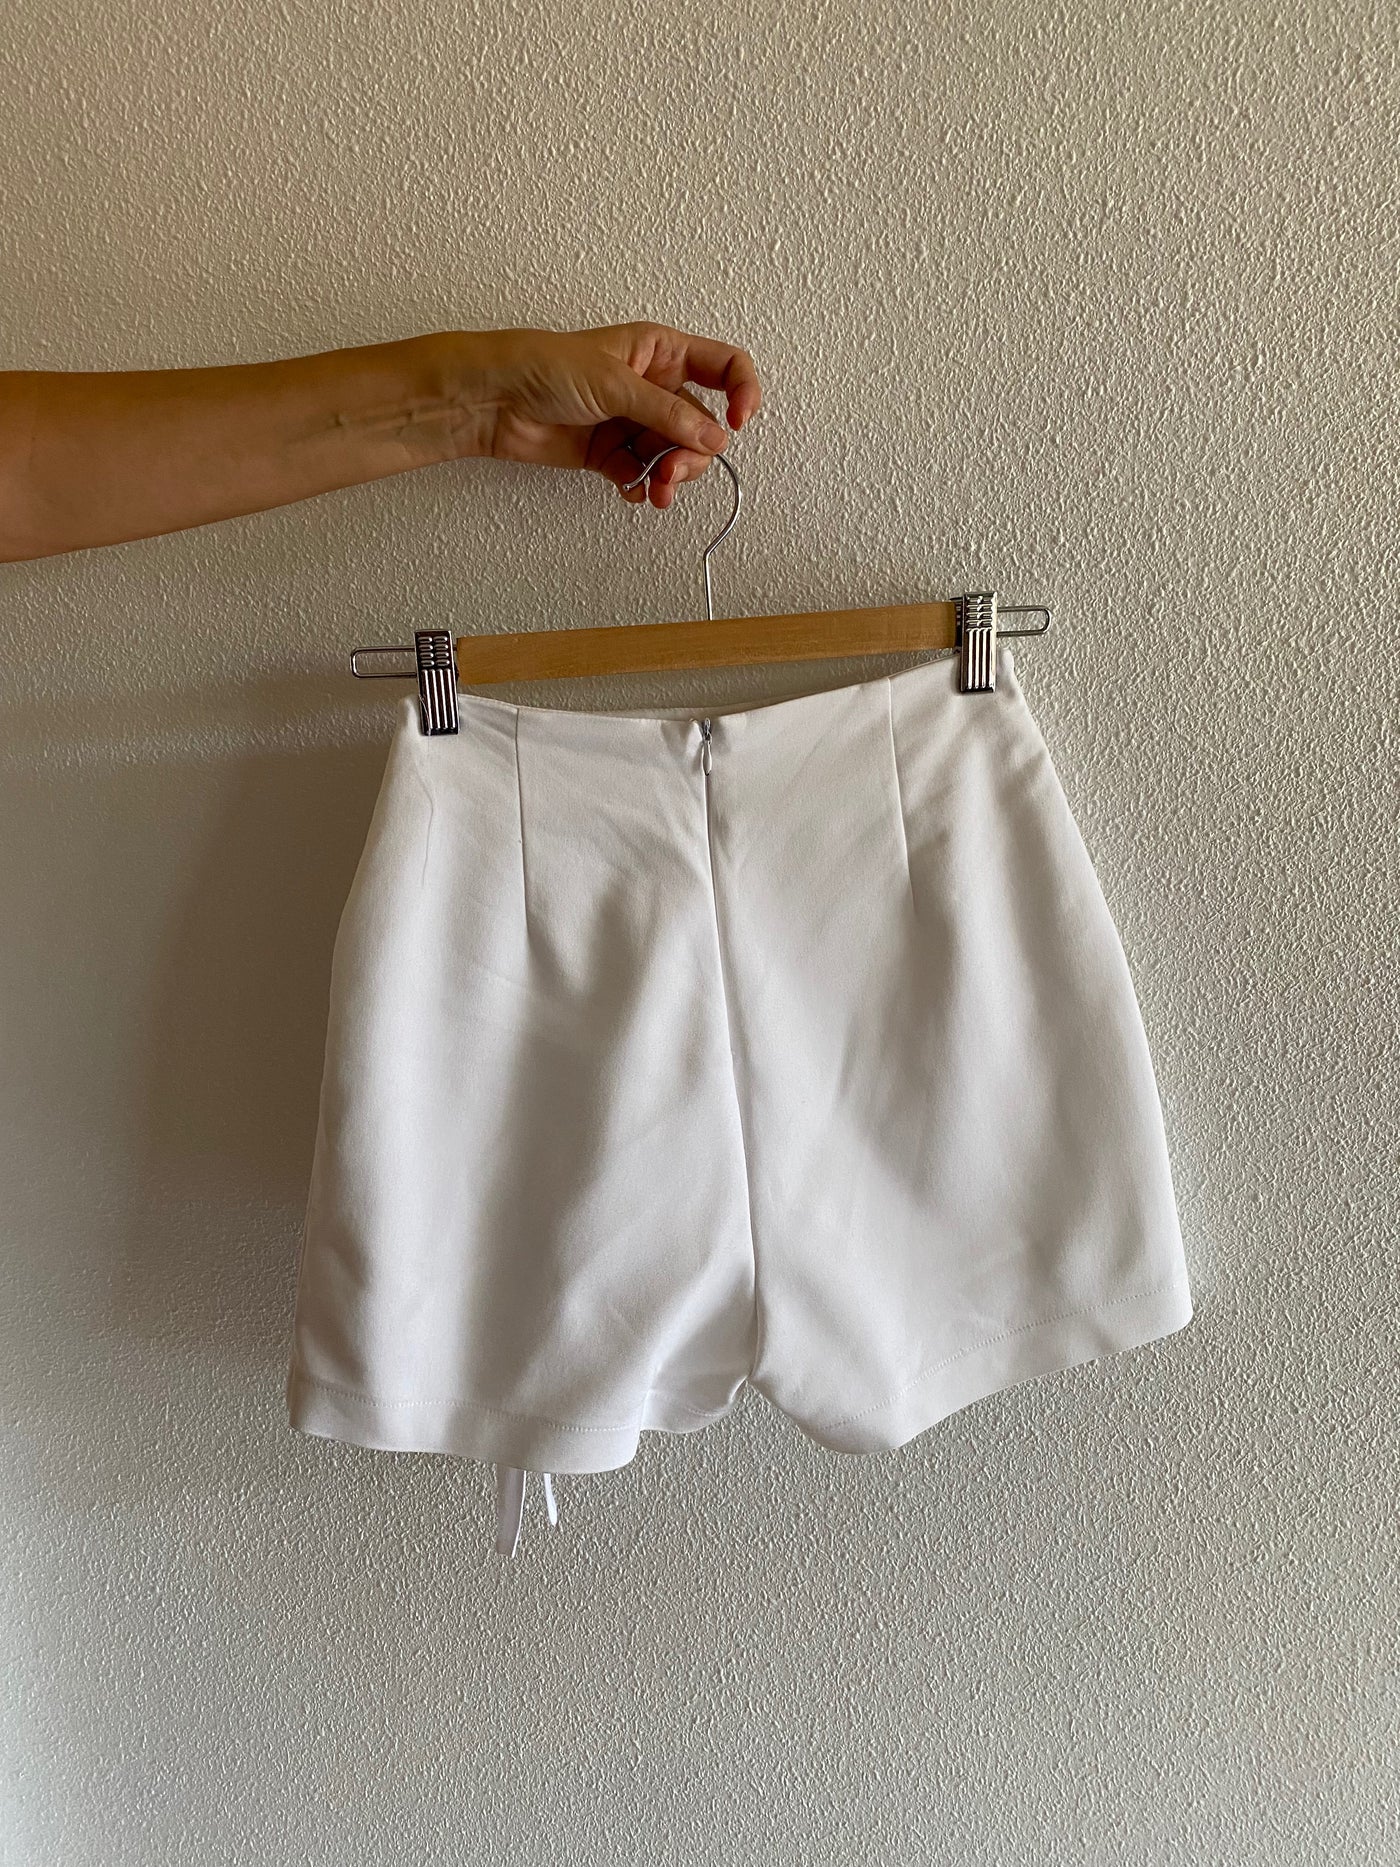 falda pantalon blanca parte trasera